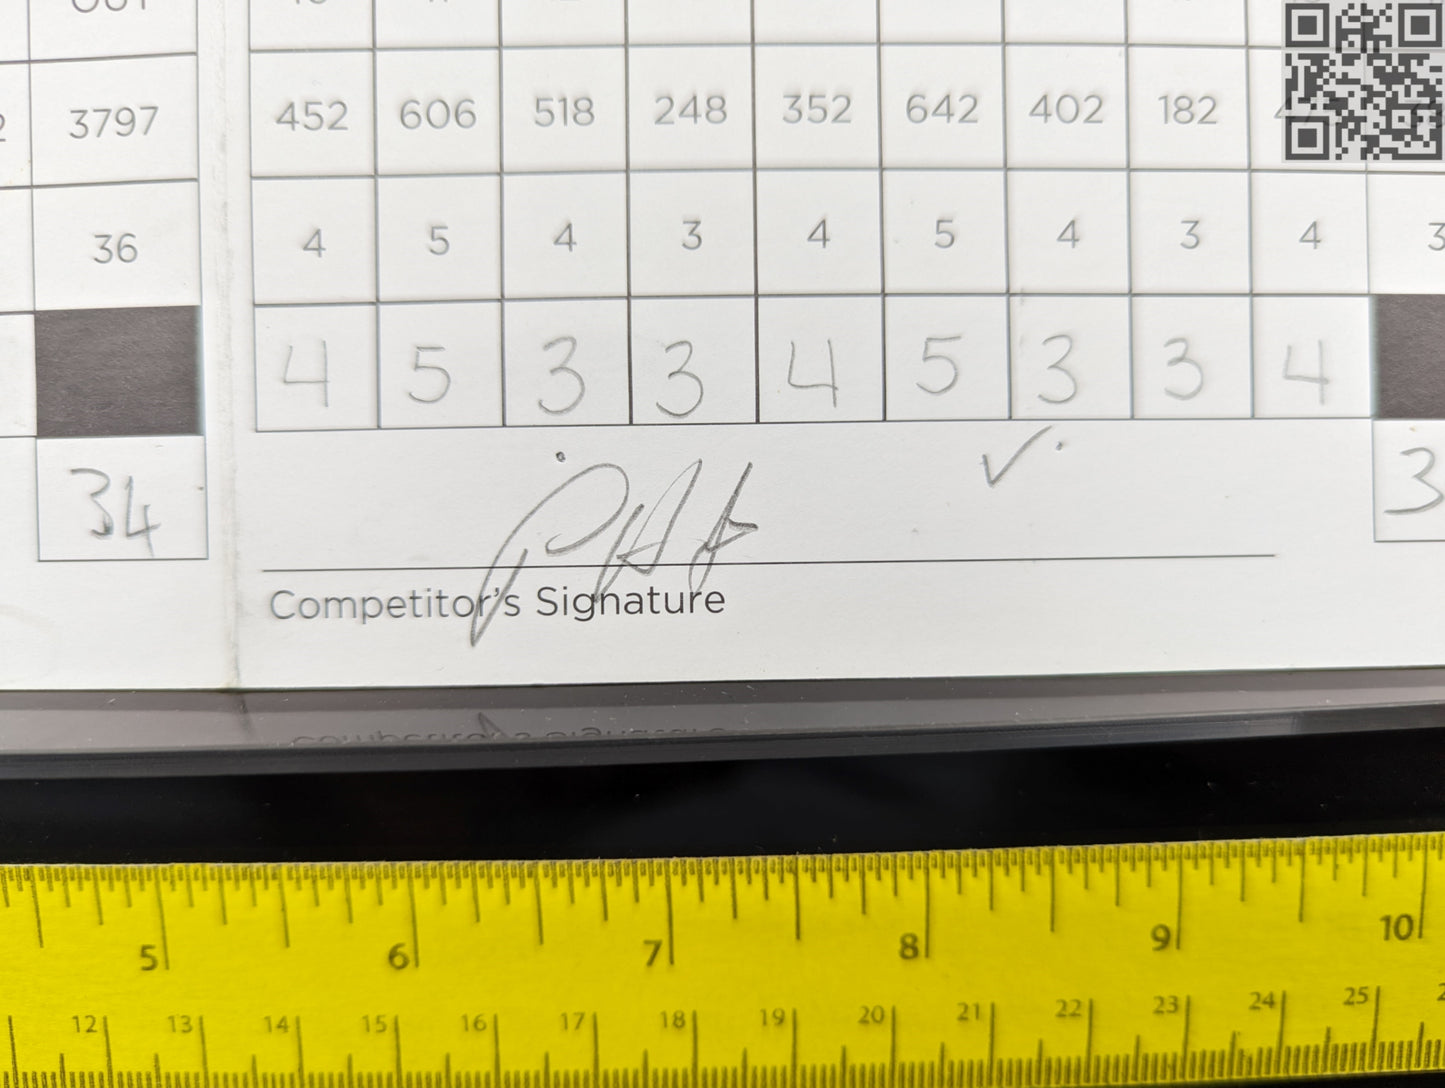 2009 PGA Championship Hazeltine Tiger Woods Signed Official Tournament Scorecard